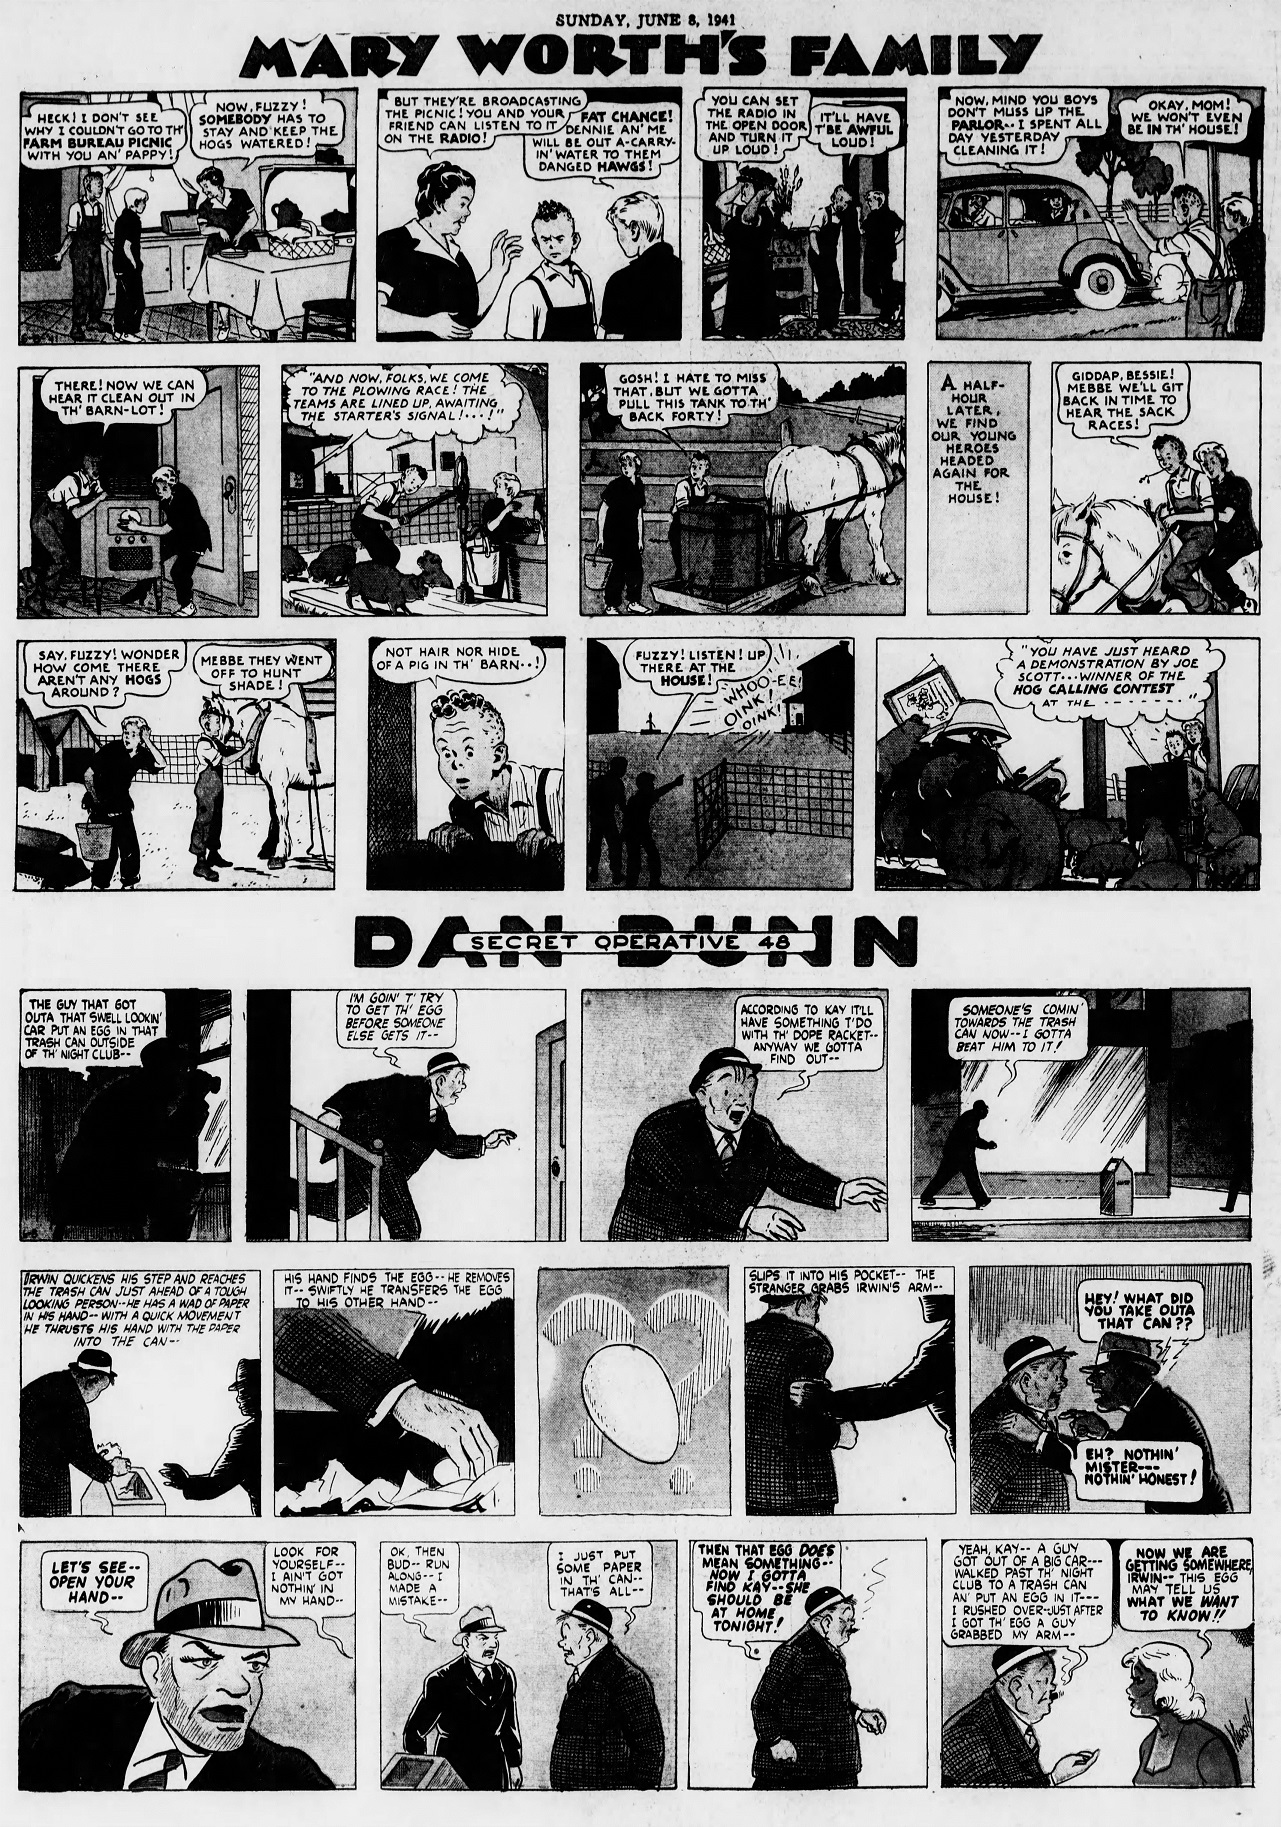 The_Brooklyn_Daily_Eagle_Sun__Jun_8__1941_(6).jpg